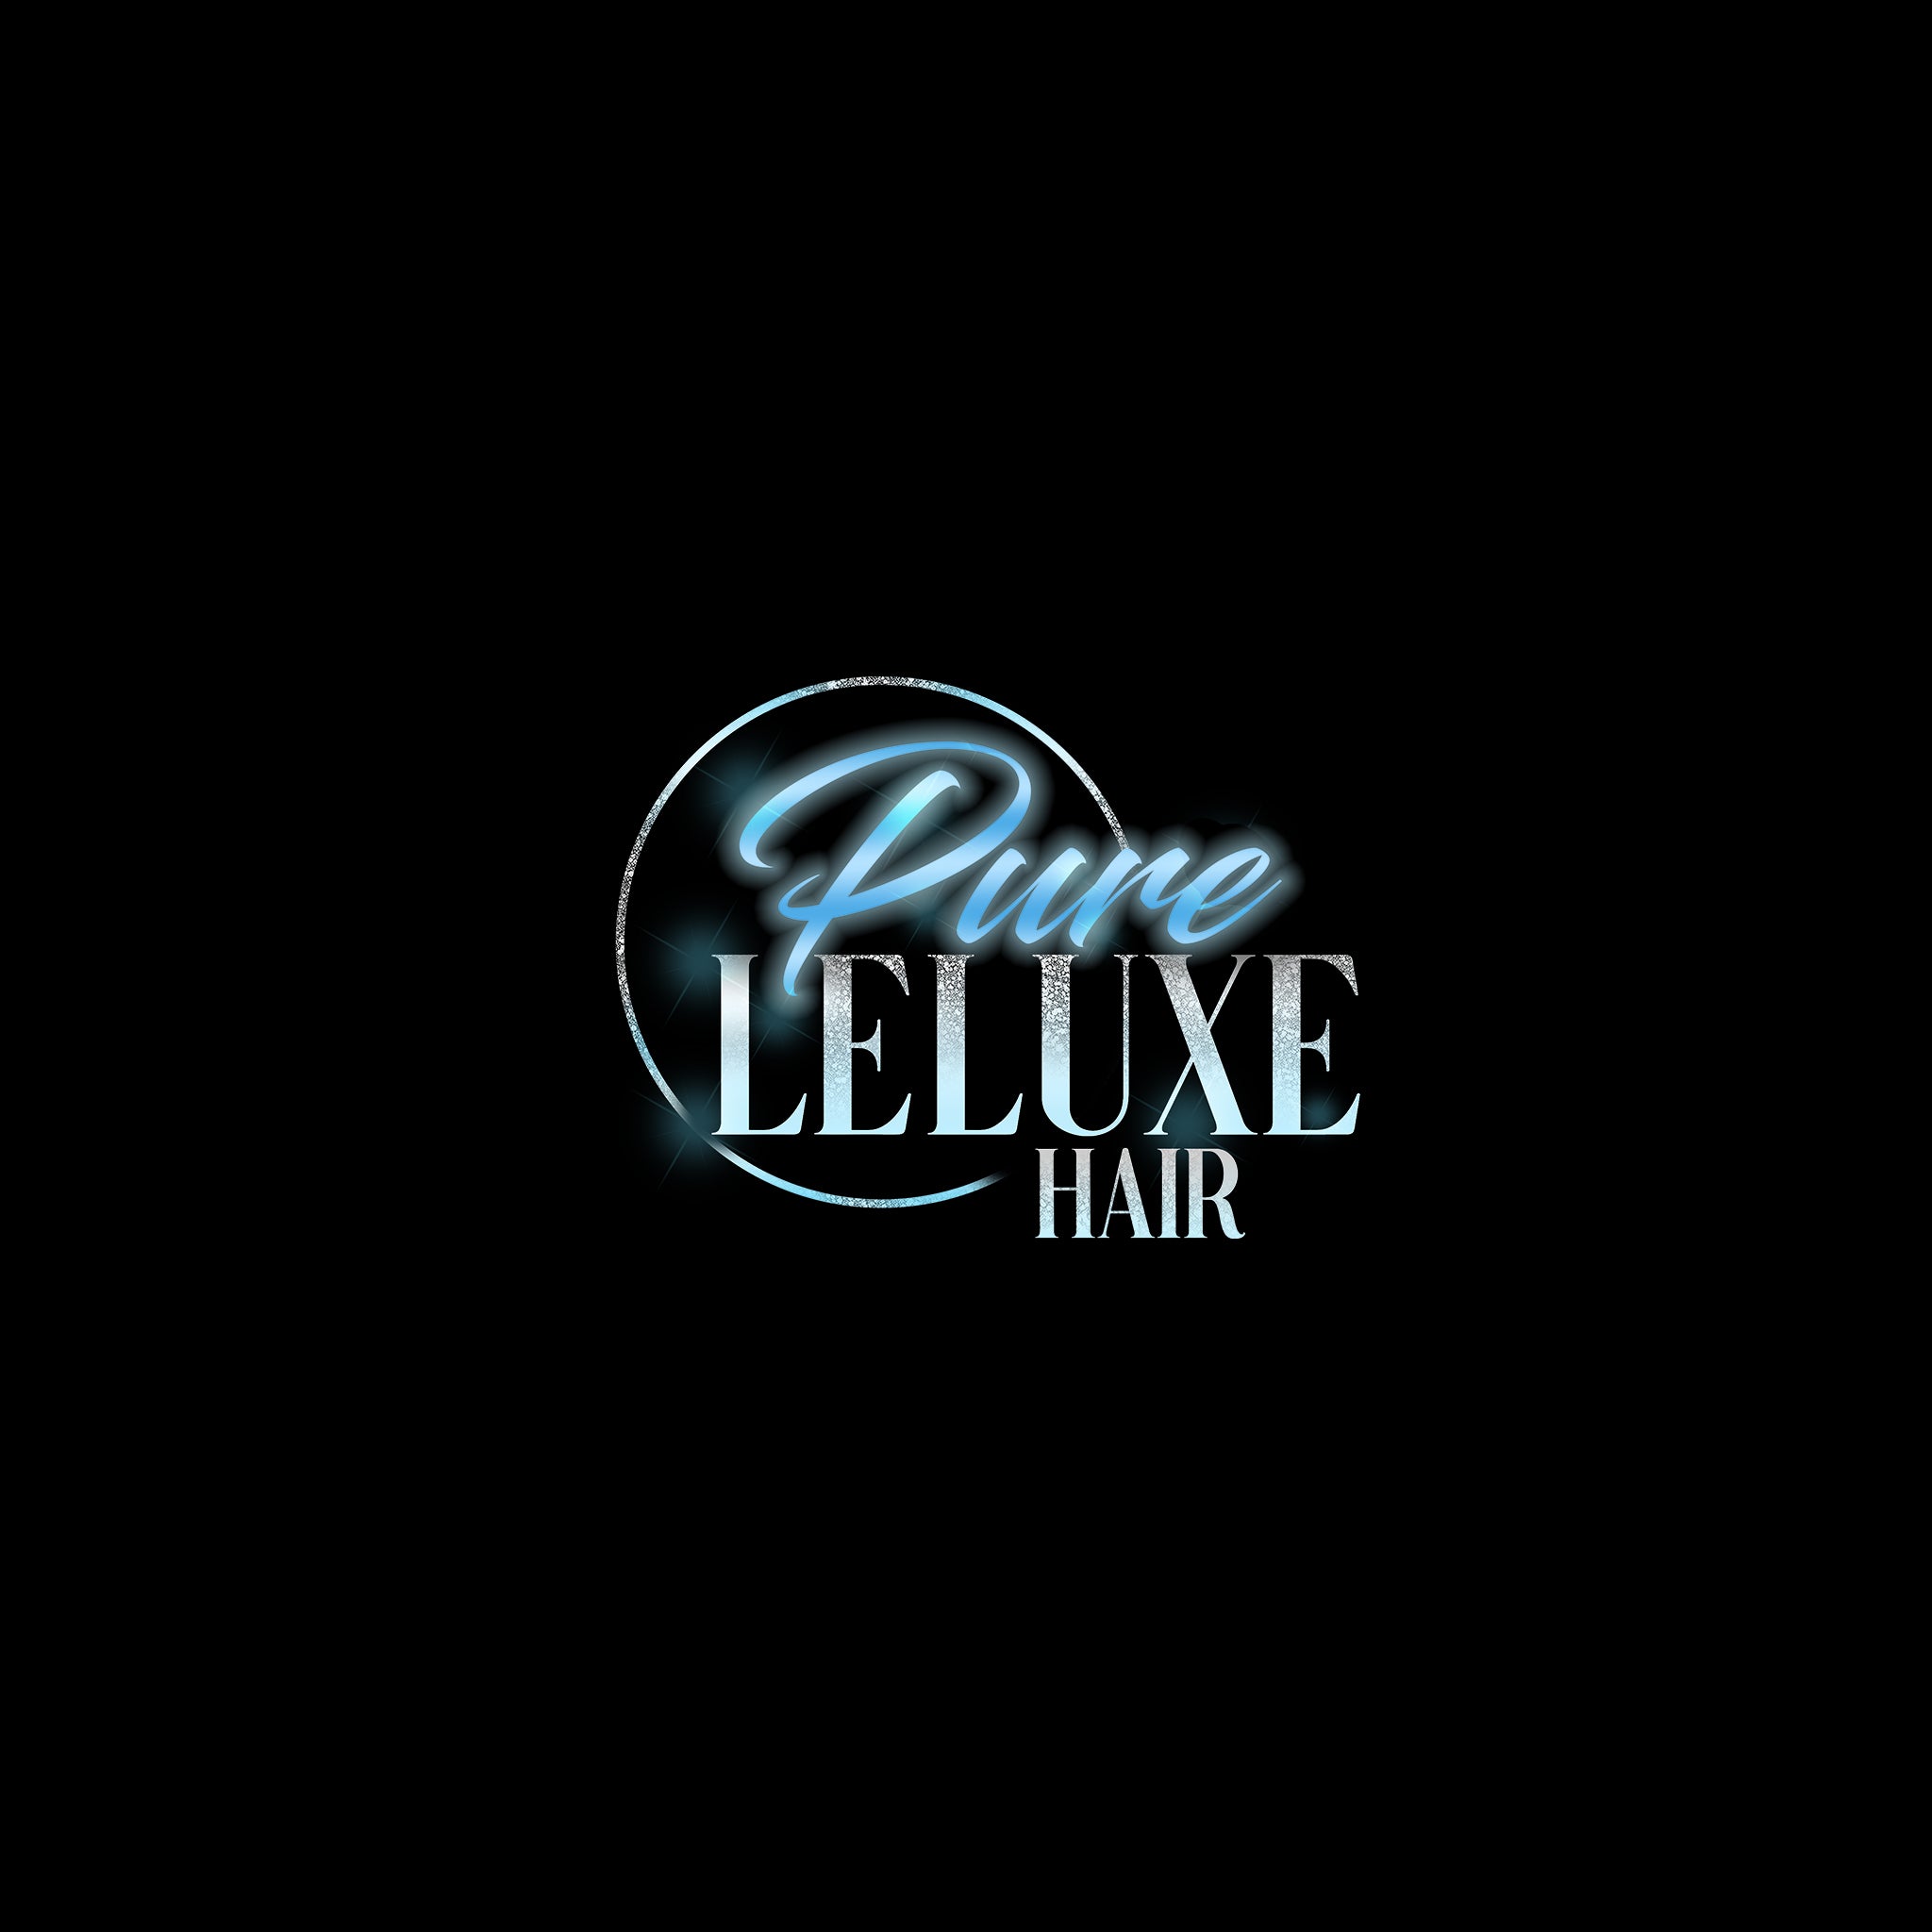 Pure Leluxe Hair, LLC